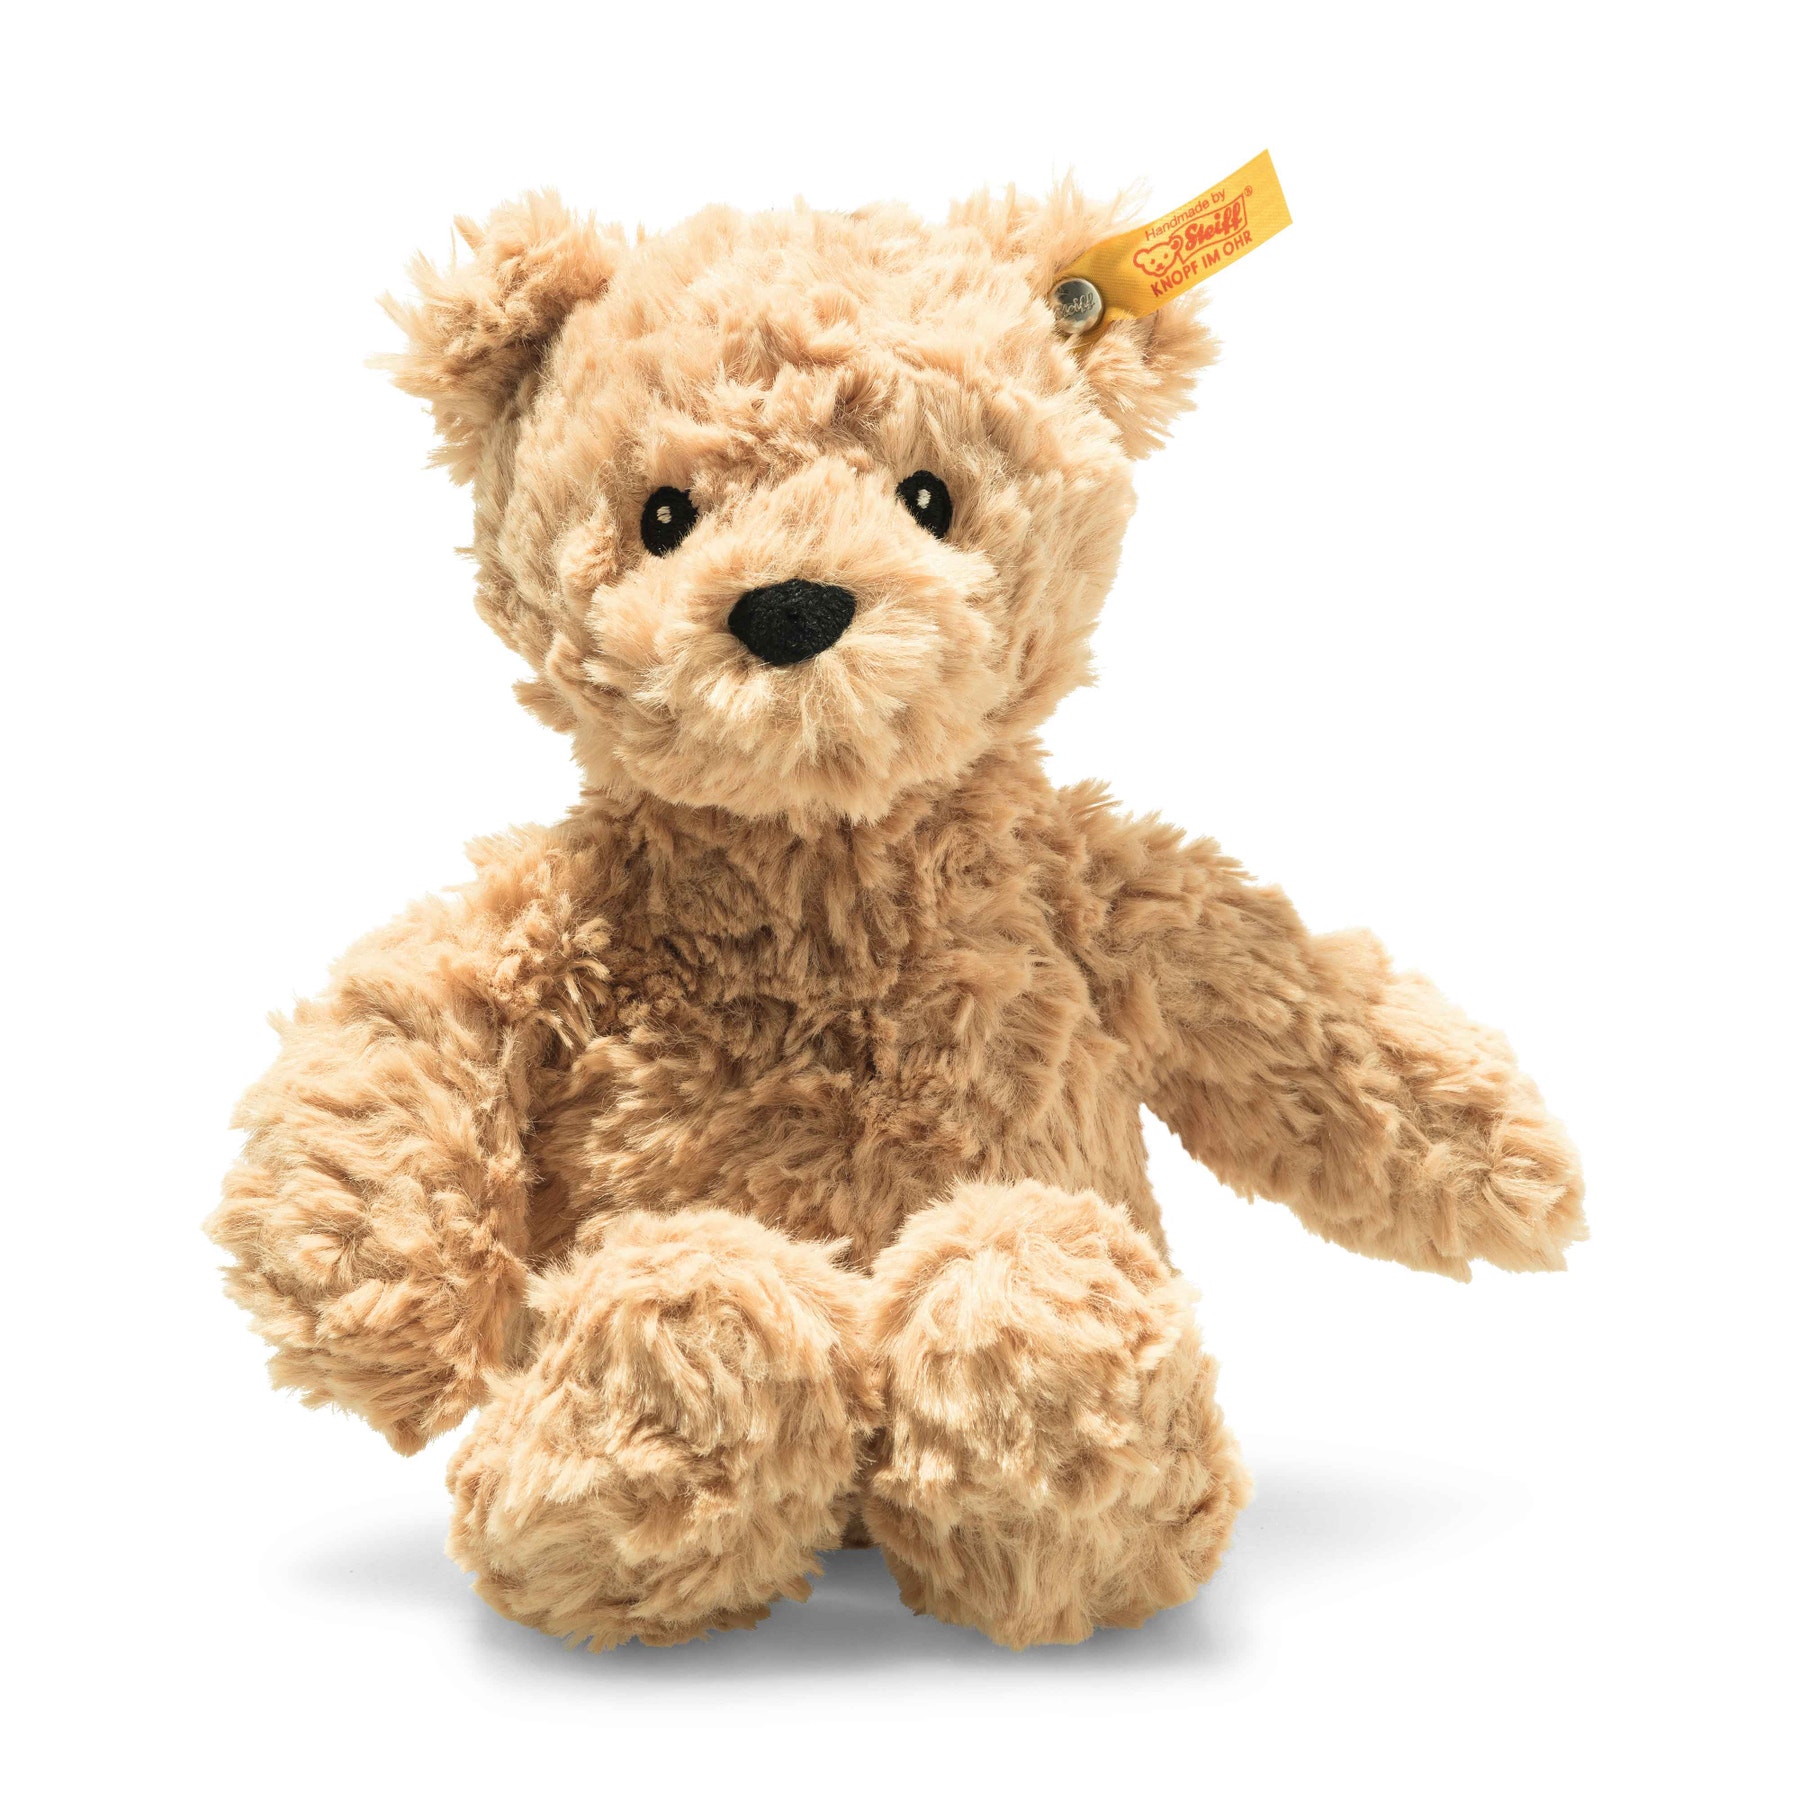 Baby Jimmy Teddy Bear